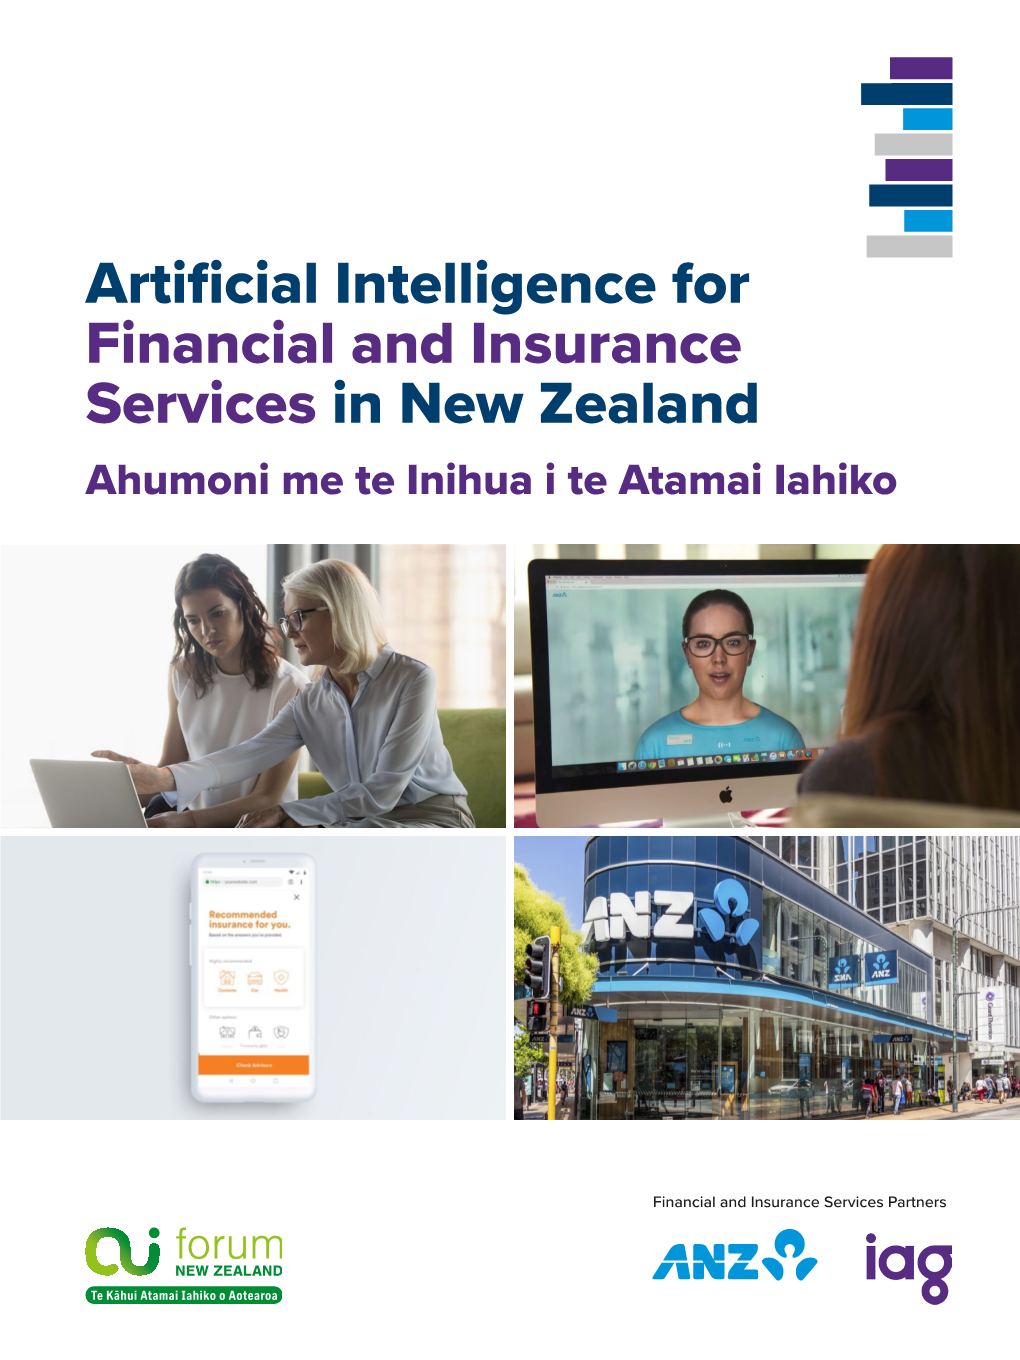 Artificial Intelligence for Financial and Insurance Services in New Zealand Ahumoni Me Te Inihua I Te Atamai Iahiko